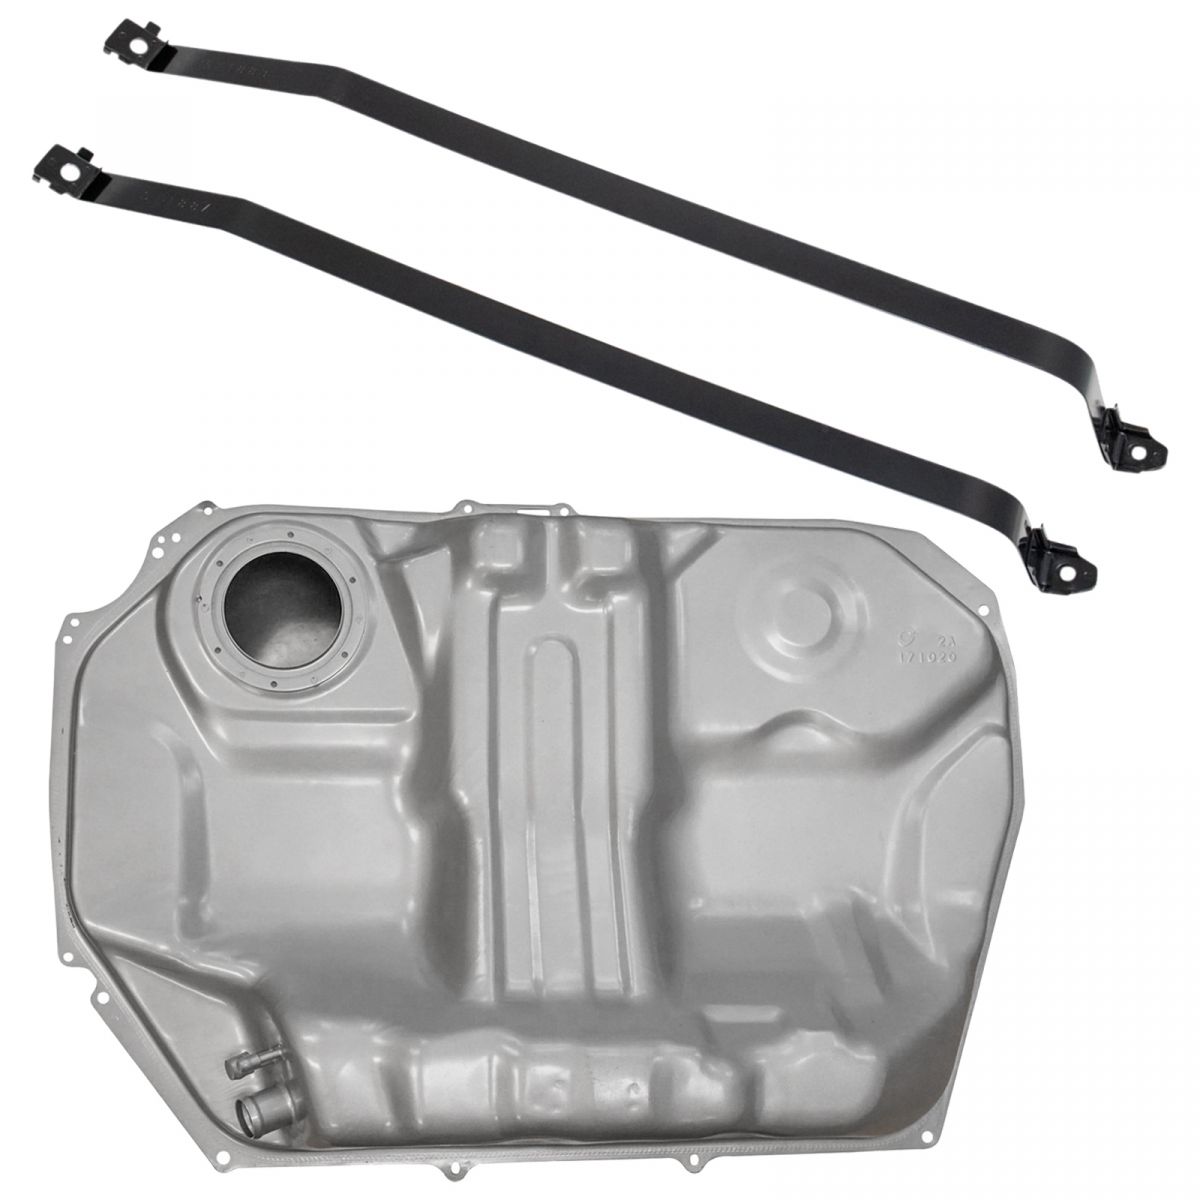 15 Gallon Fuel Gas Tank and Strap Kit Set for Honda CRV New eBay